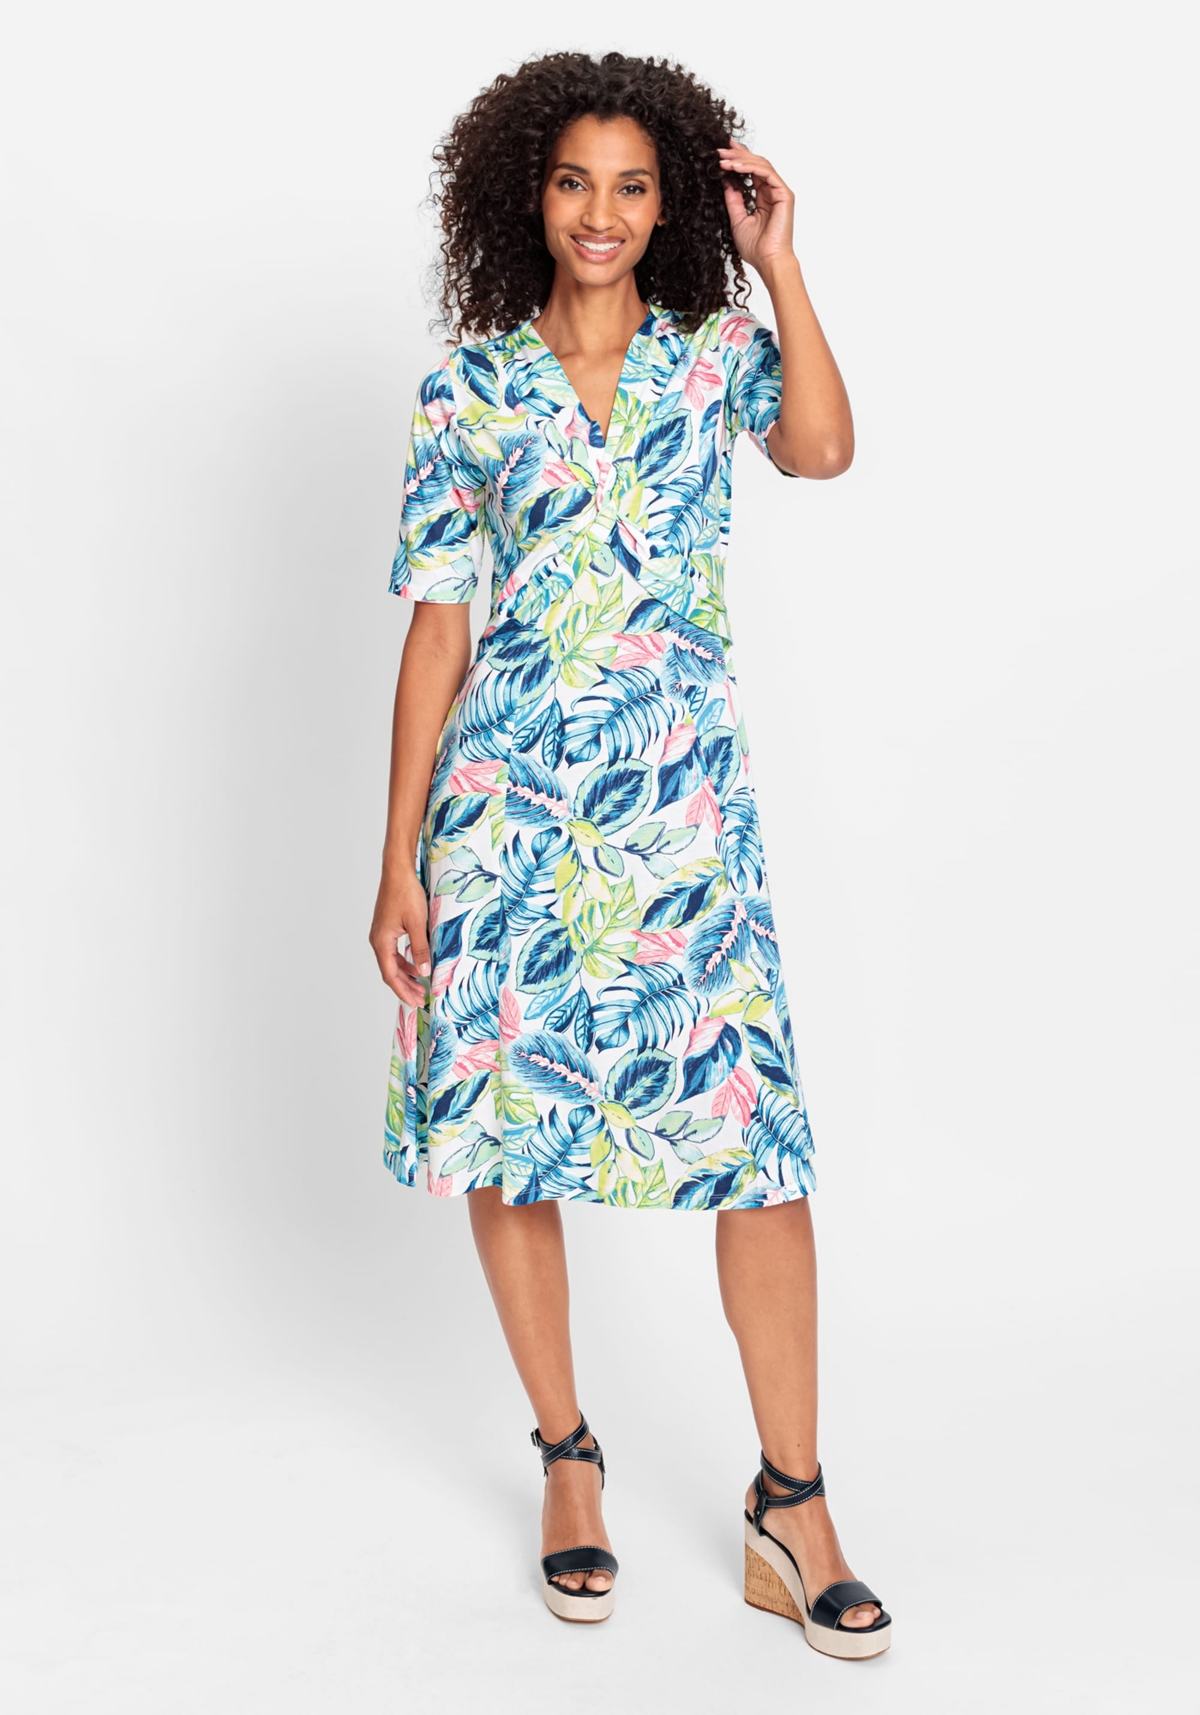 Women's Short Sleeve Tropic Print A-Line Dress containing Tencel[Tm] Modal - Light turquoise